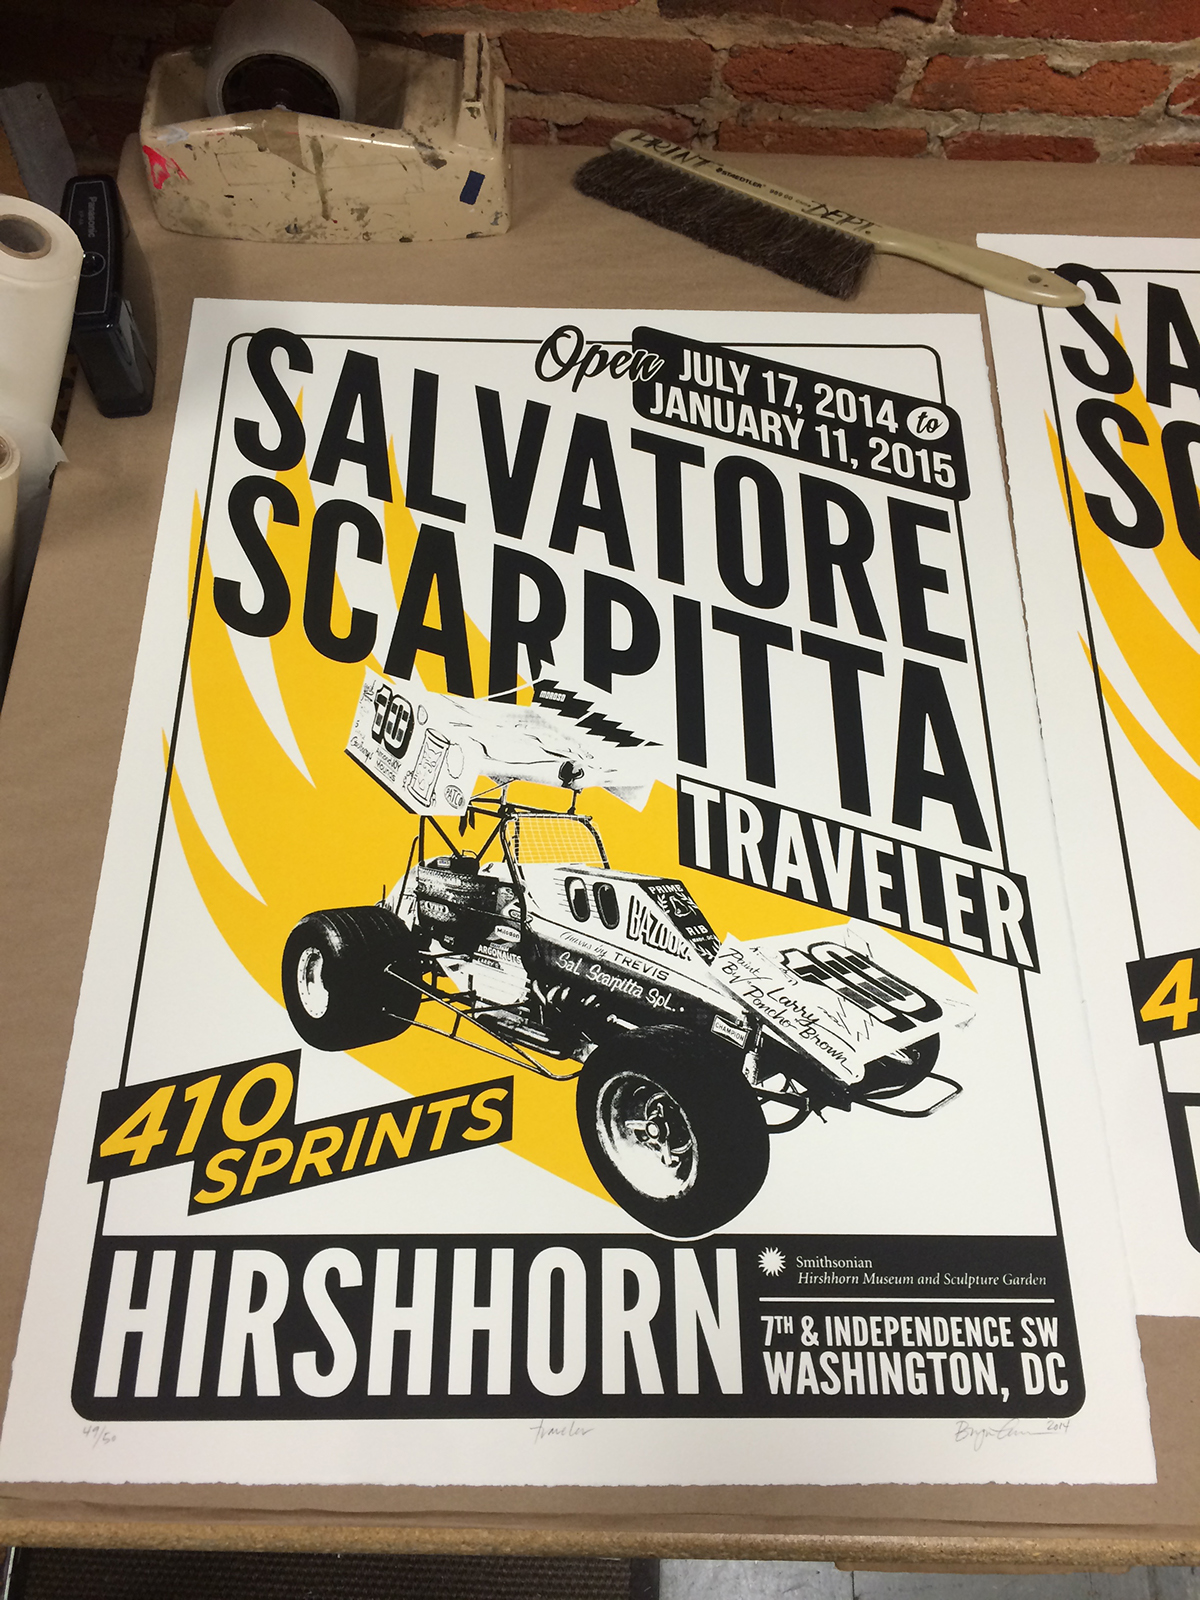 Adobe Portfolio salvatore scarpitta traveler Hirshhorn limited edition screenprint race car museum 2-color